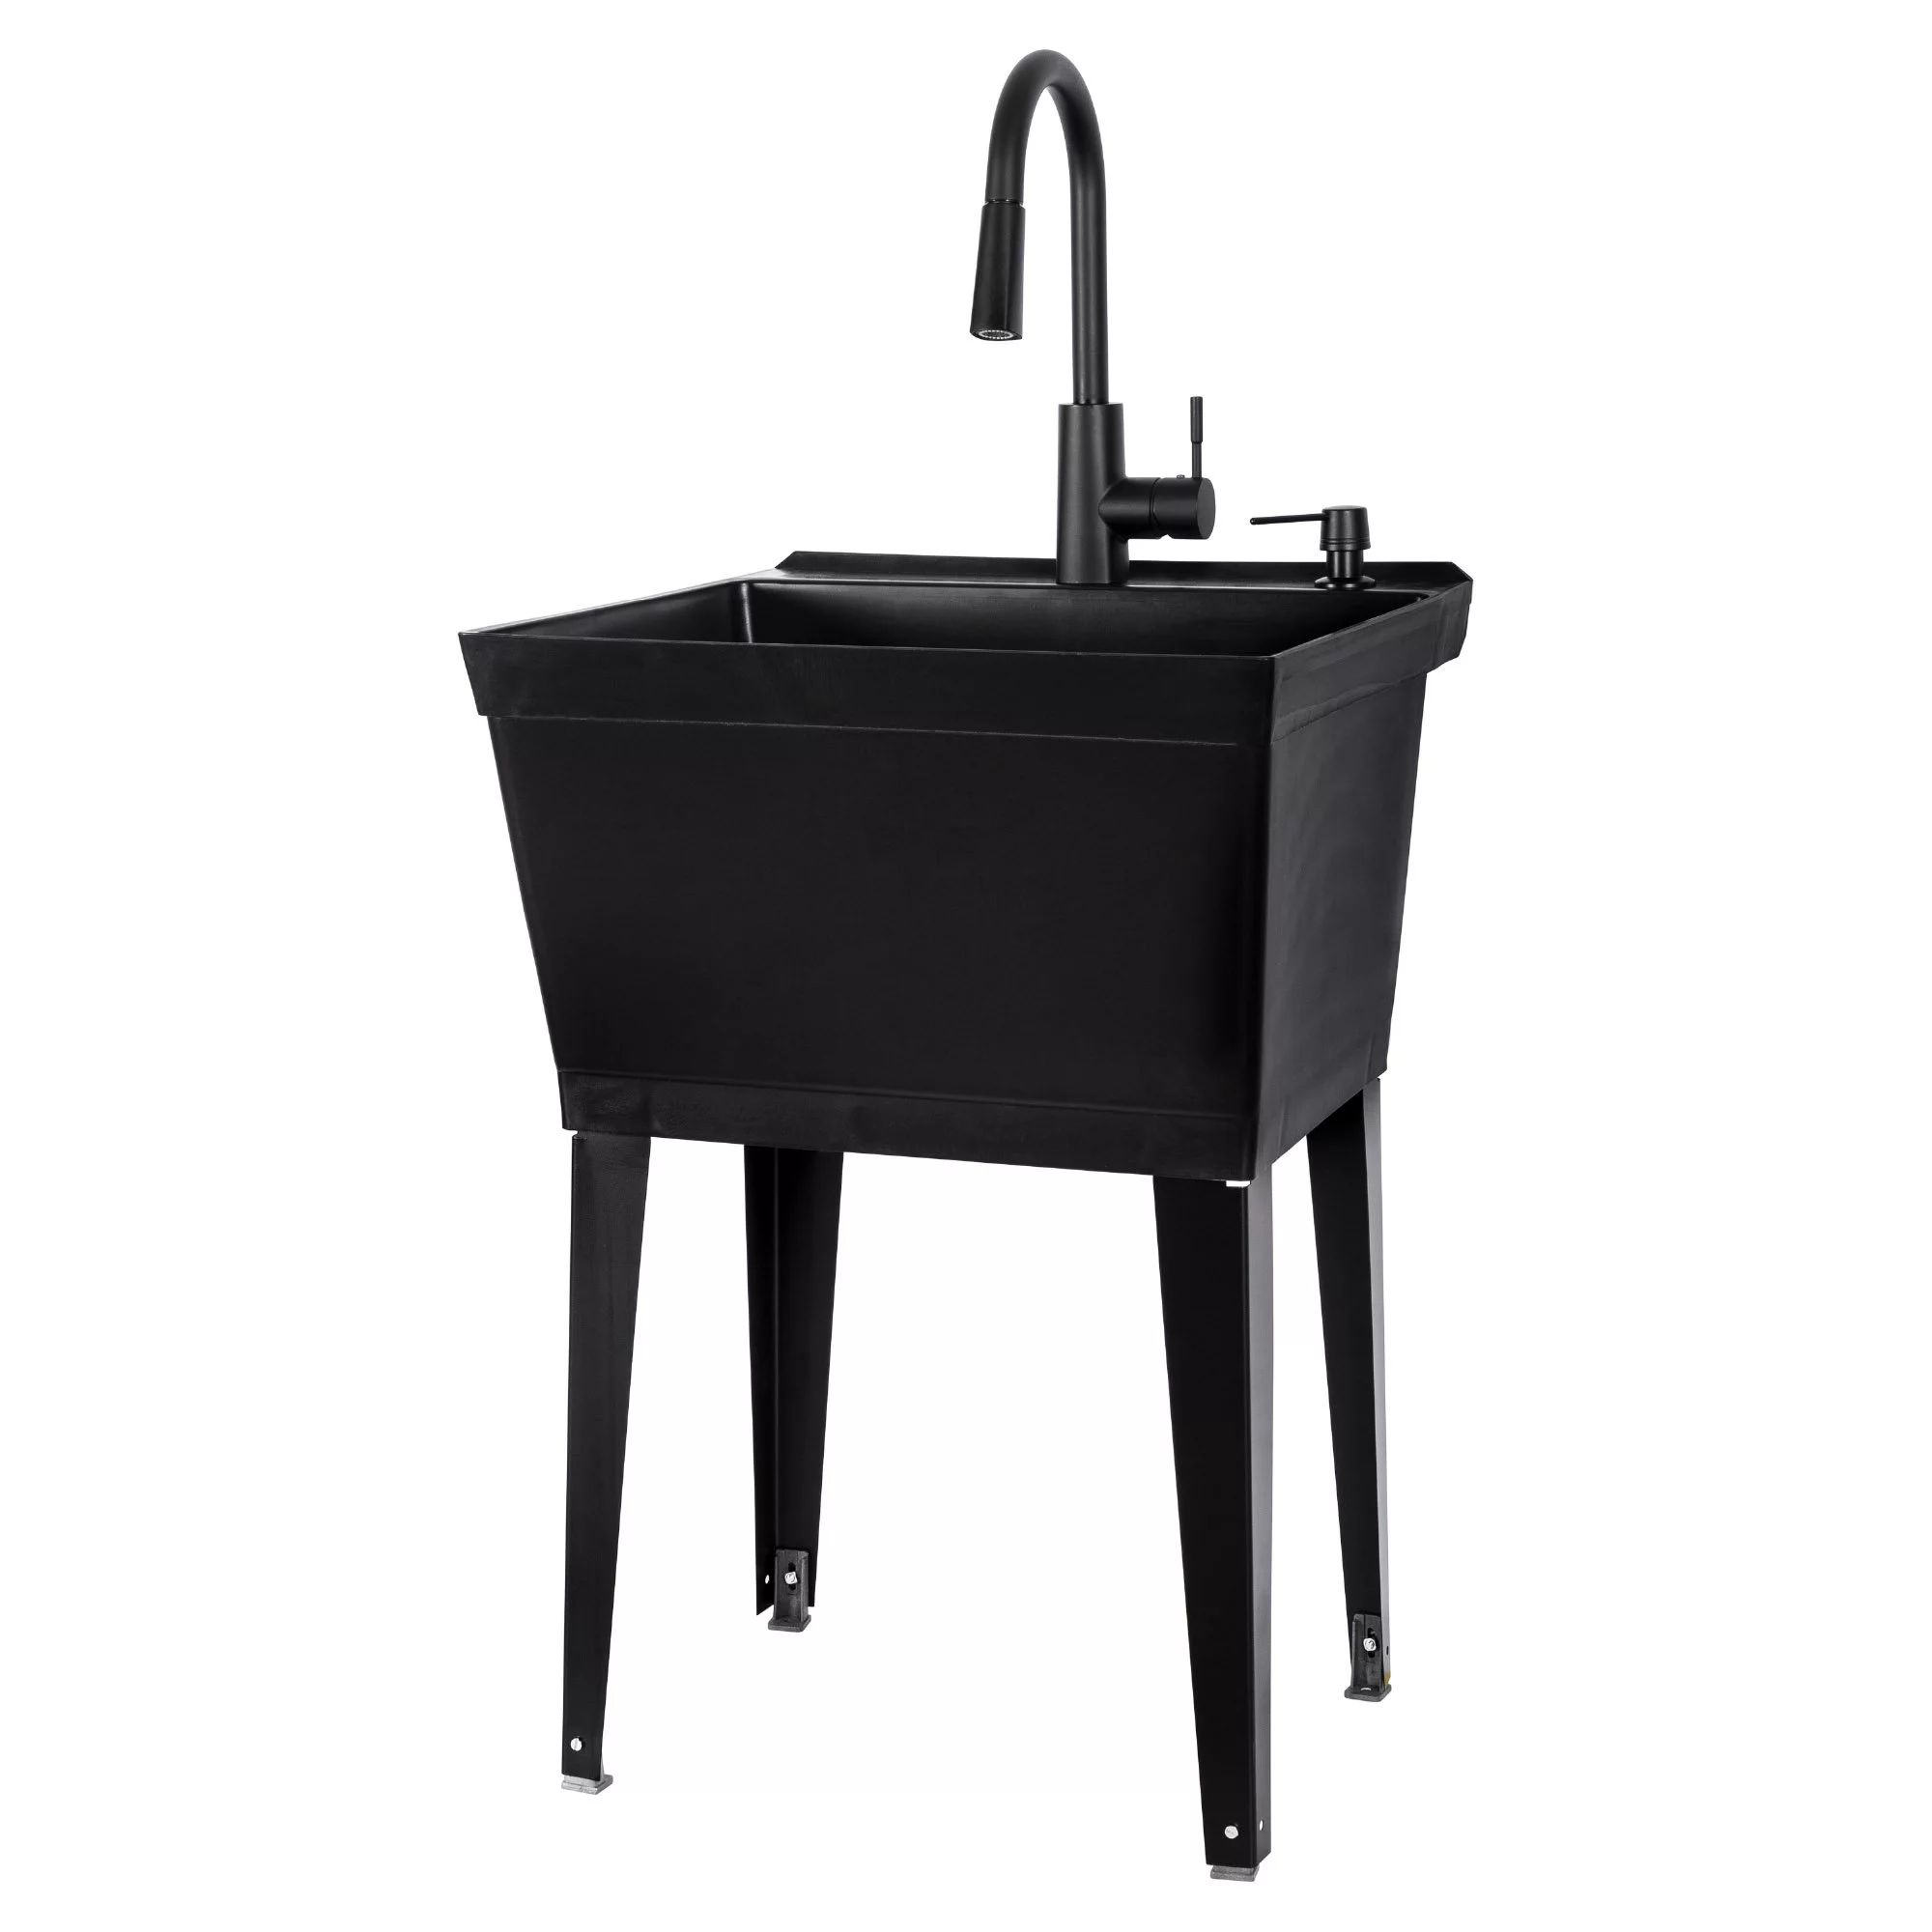 Black 19 Gallon Utility Sink with Black High Arc Faucet 6507 | Walmart (US)